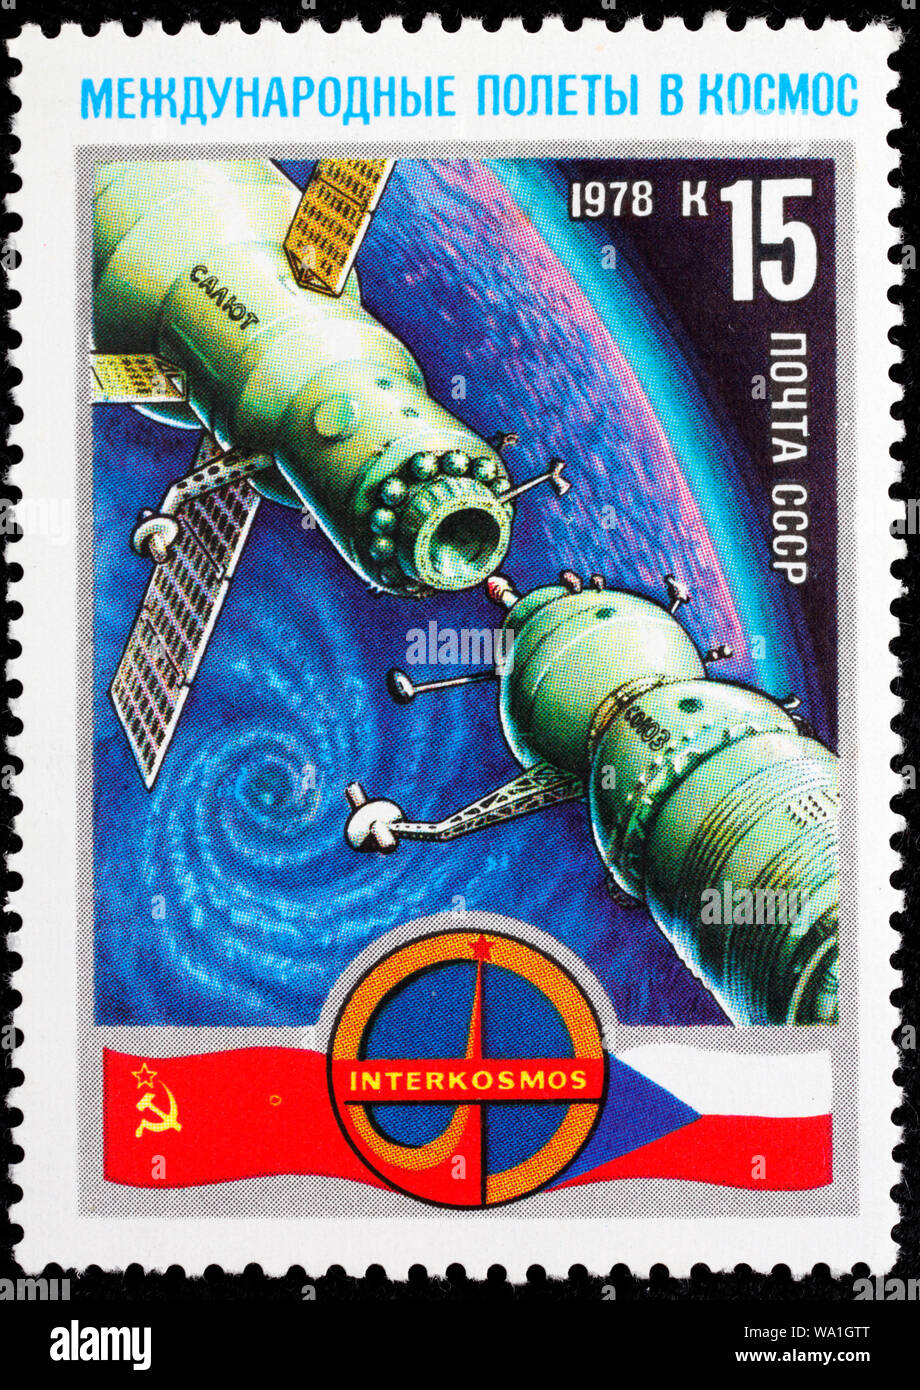 Intercosmos Space Program, Soviet-Czech Space Flight, postage stamp, Russia, USSR, 1978 Stock Photo